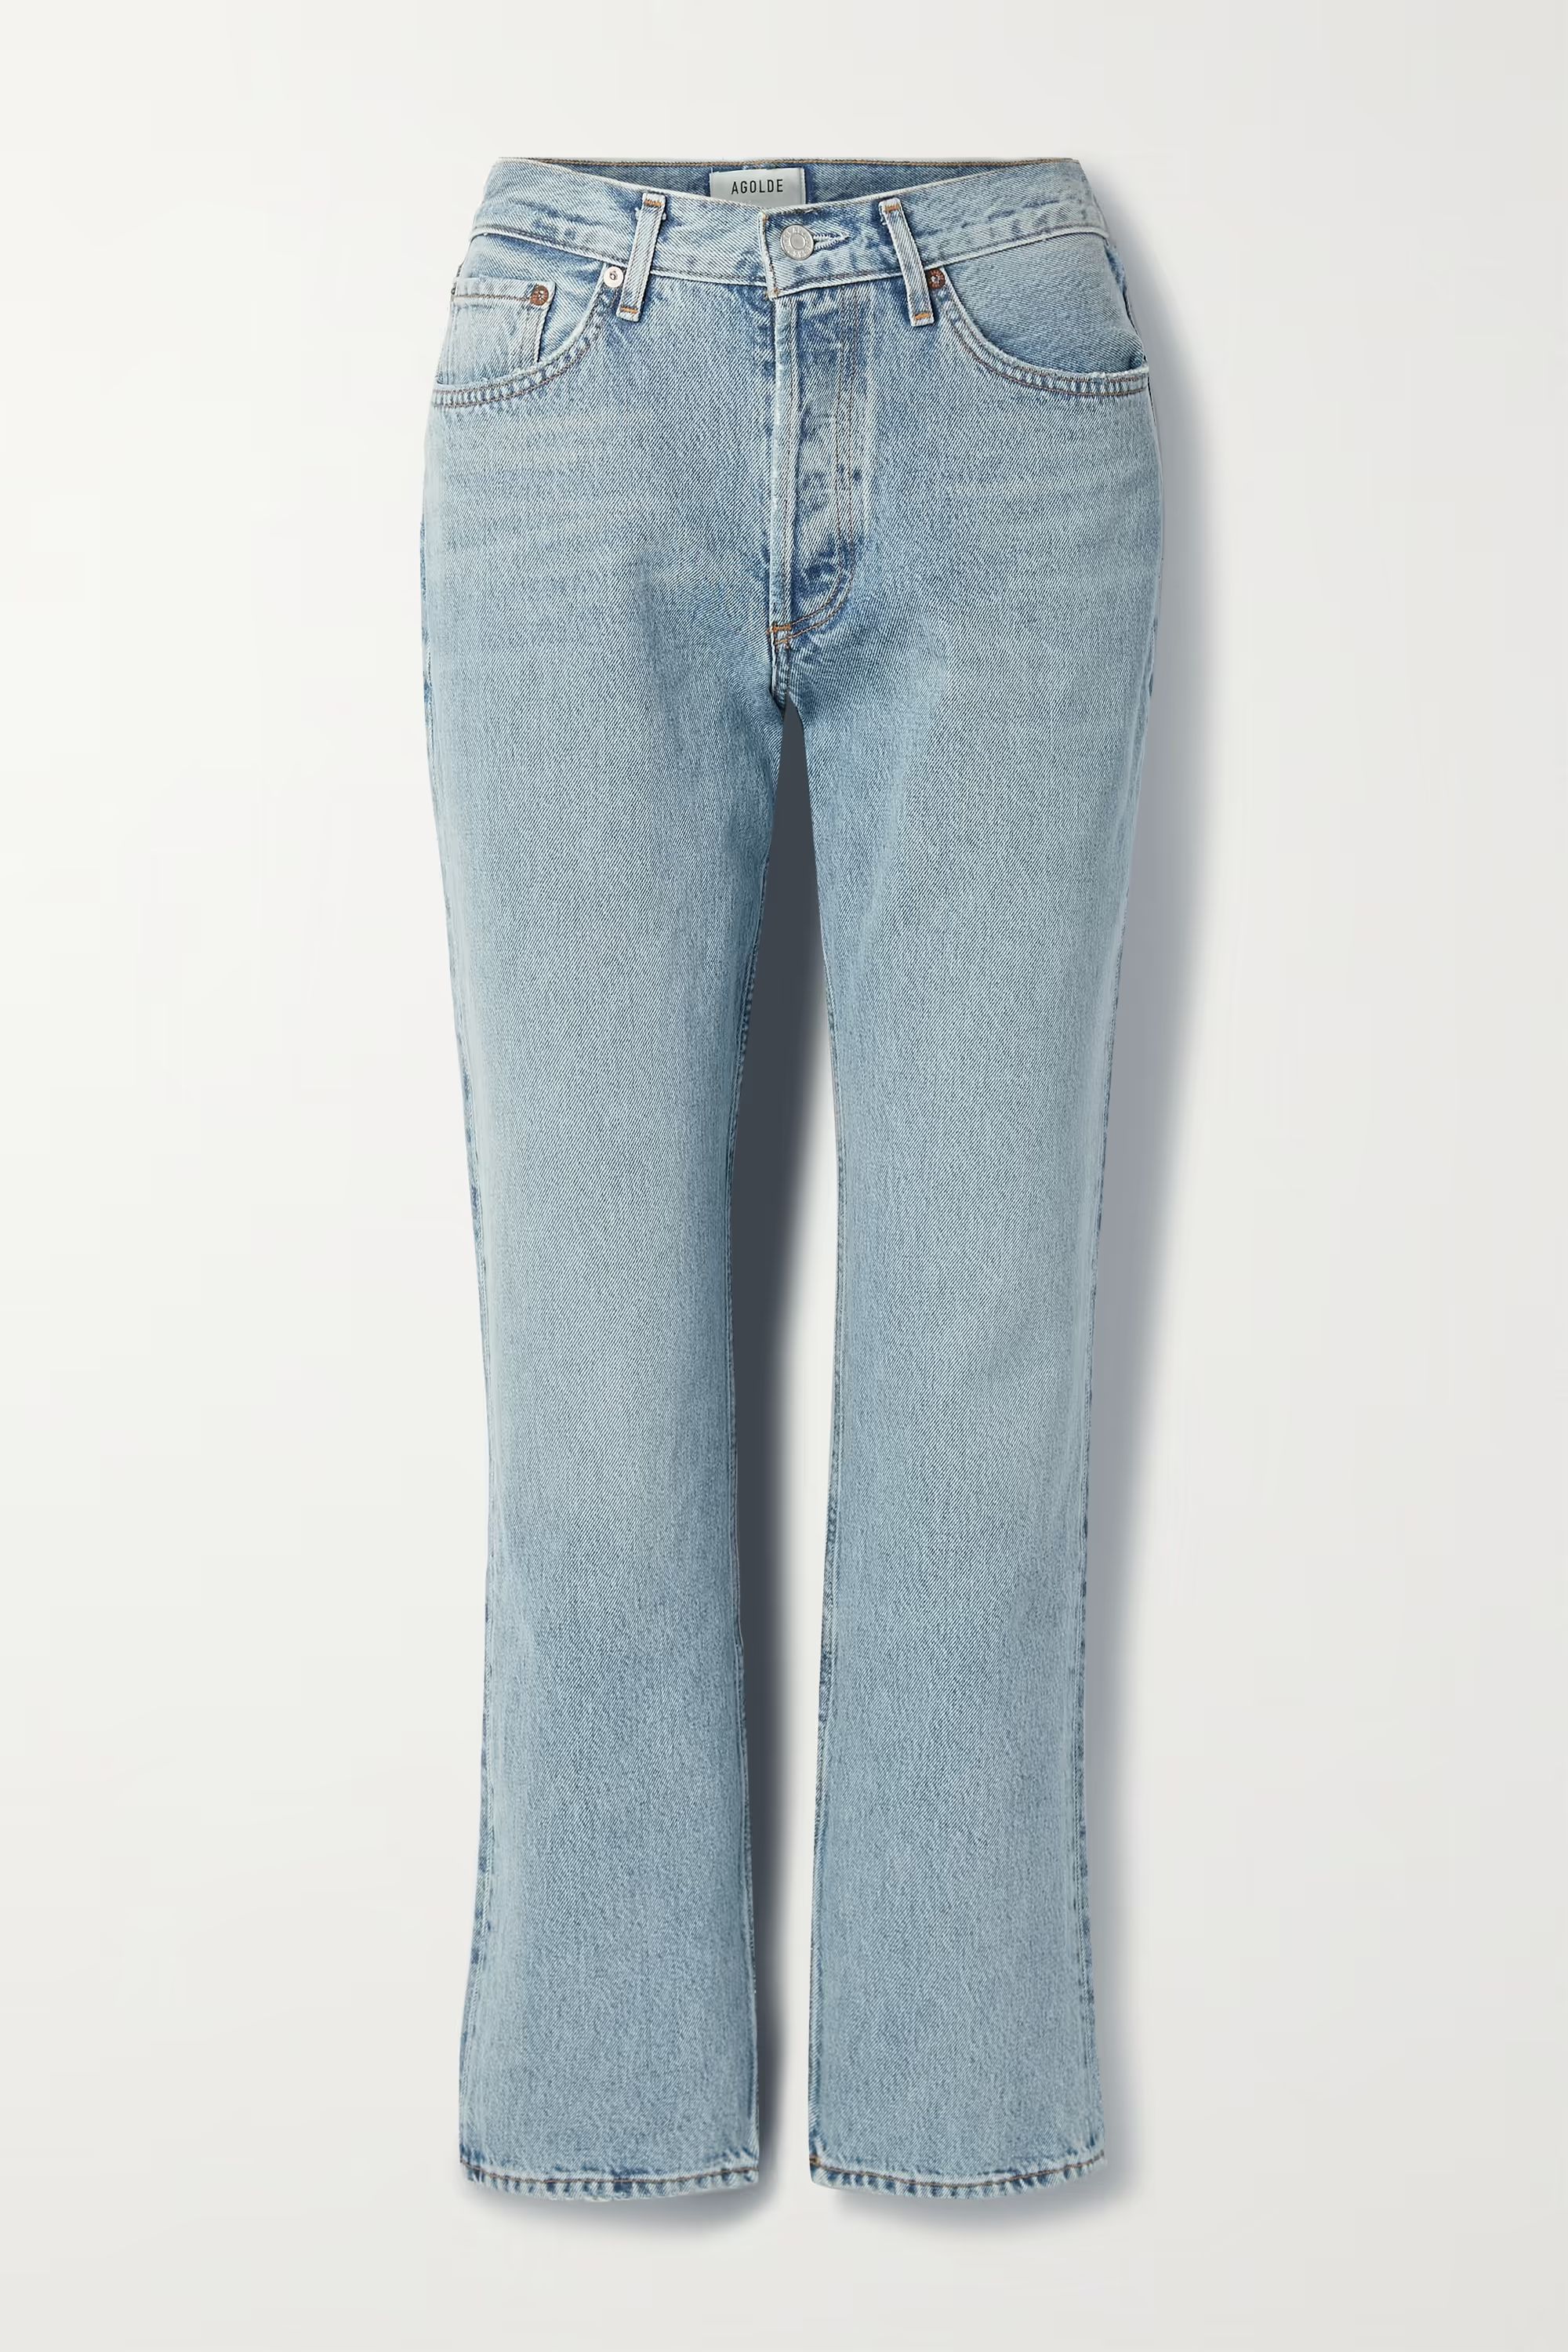 + NET SUSTAIN Lana mid-rise straight-leg organic jeans | NET-A-PORTER (US)